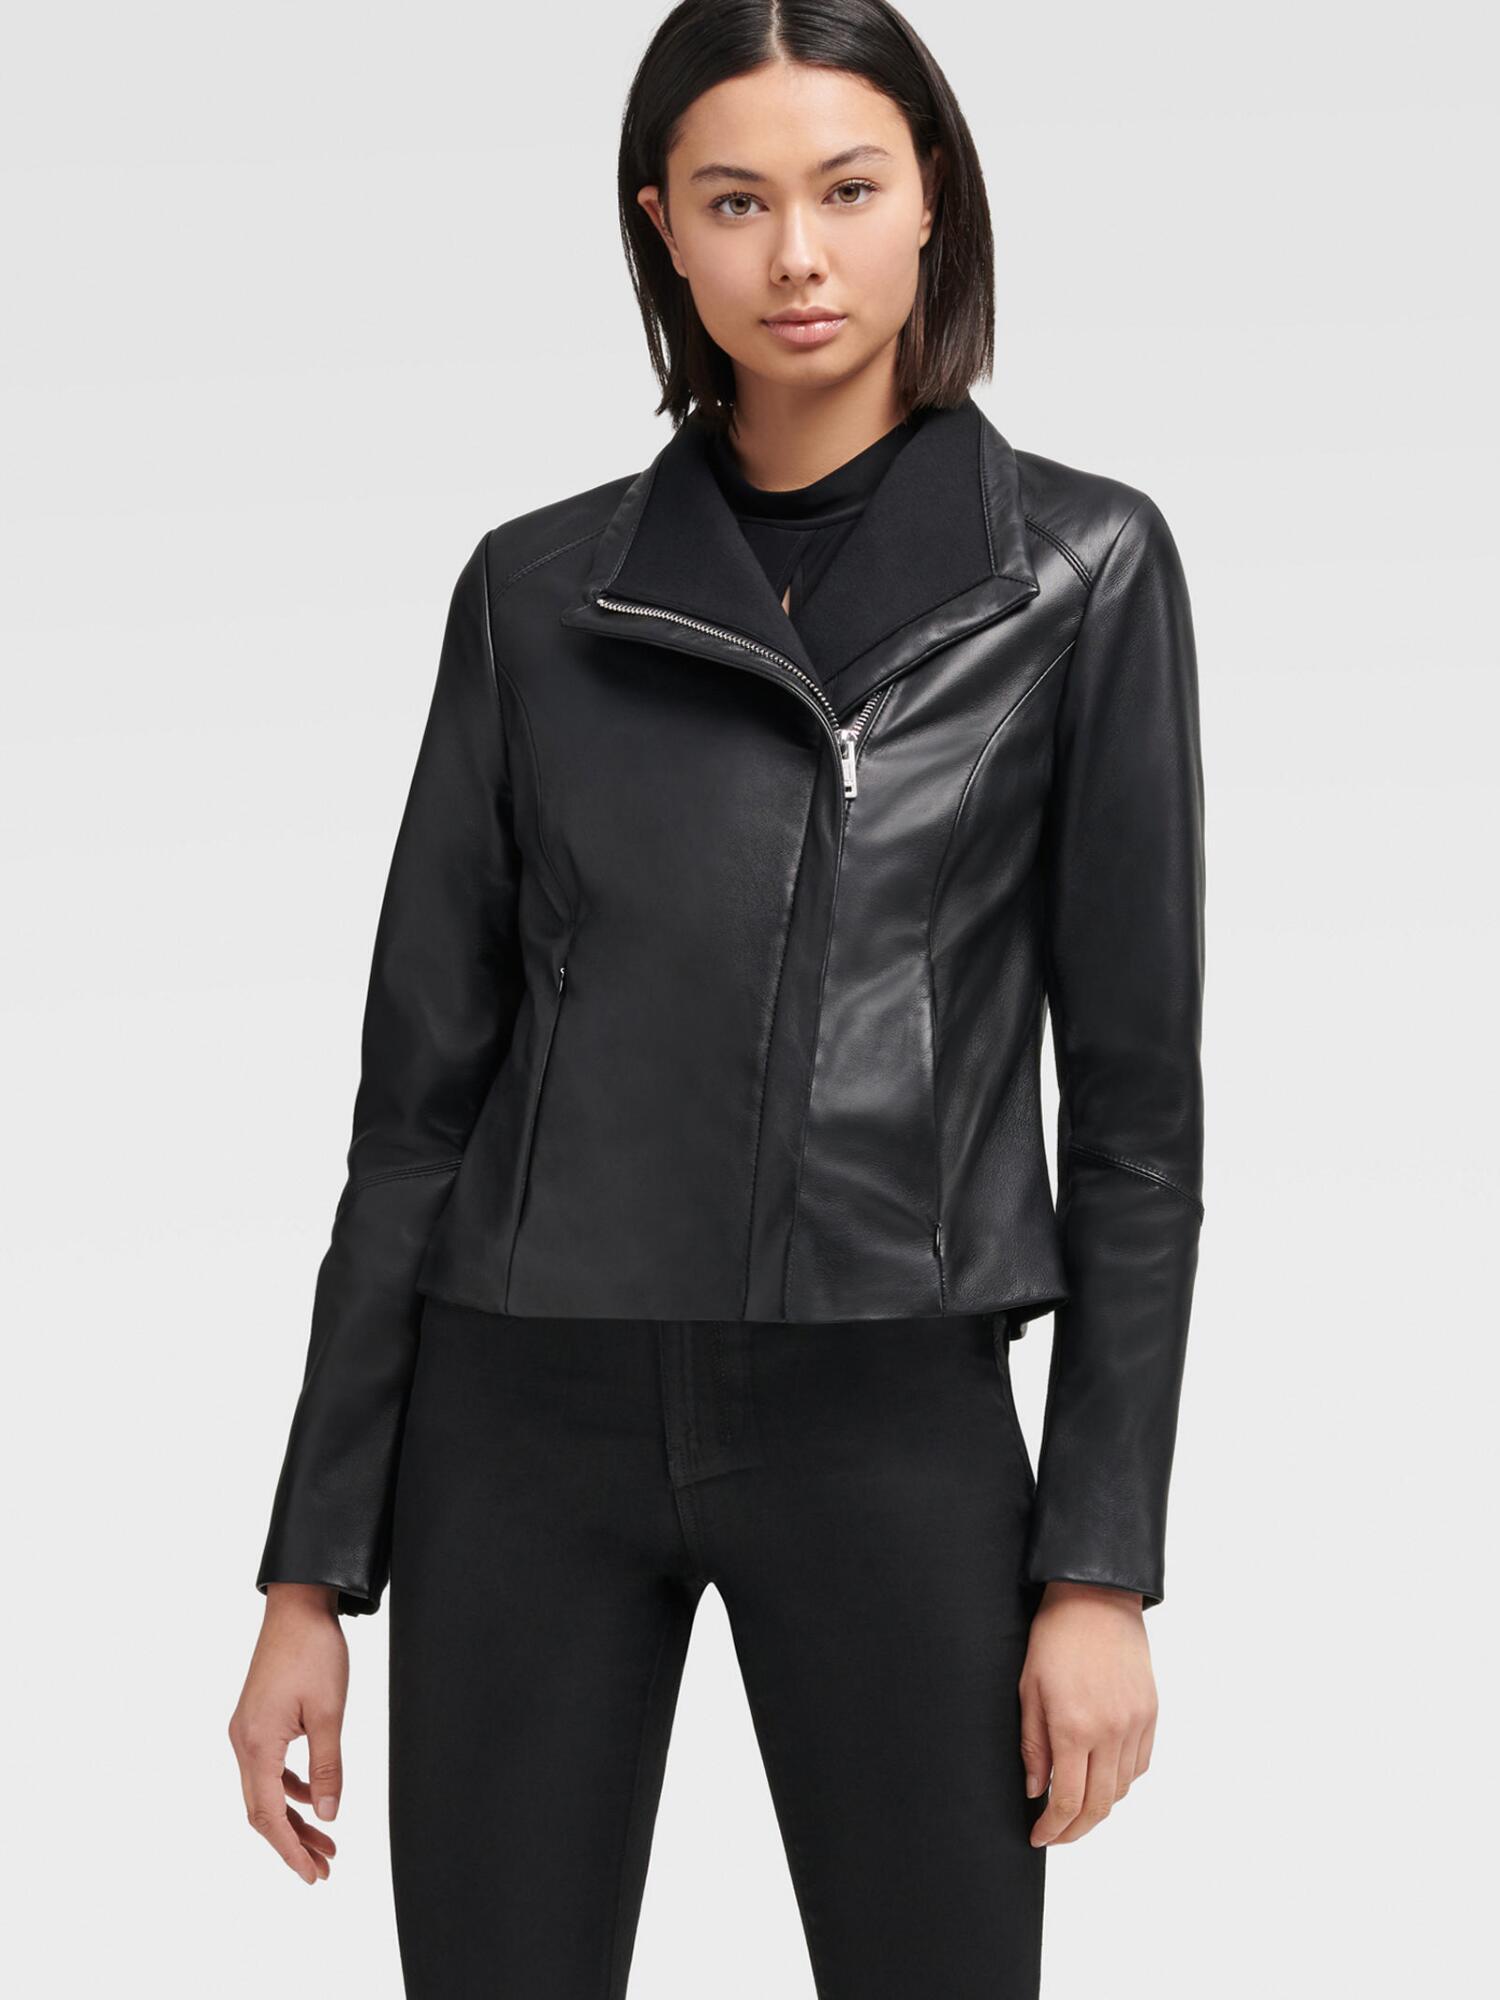 DKNY Leather Jacket in Black - Lyst